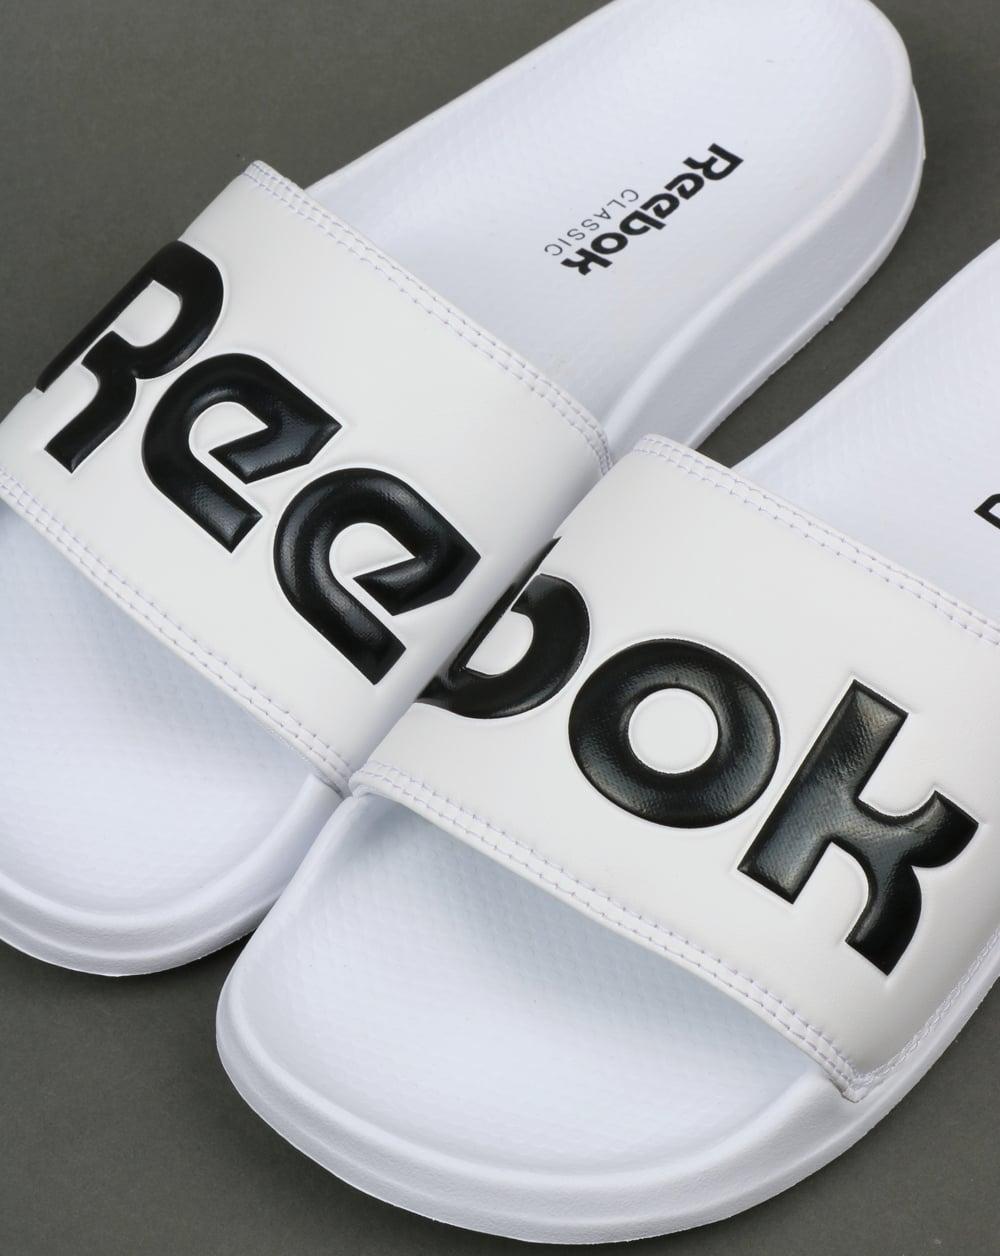 Reebok Classic Logo - Reebok Classic Logo Sliders White,sliders,sandals,pool,flip flops